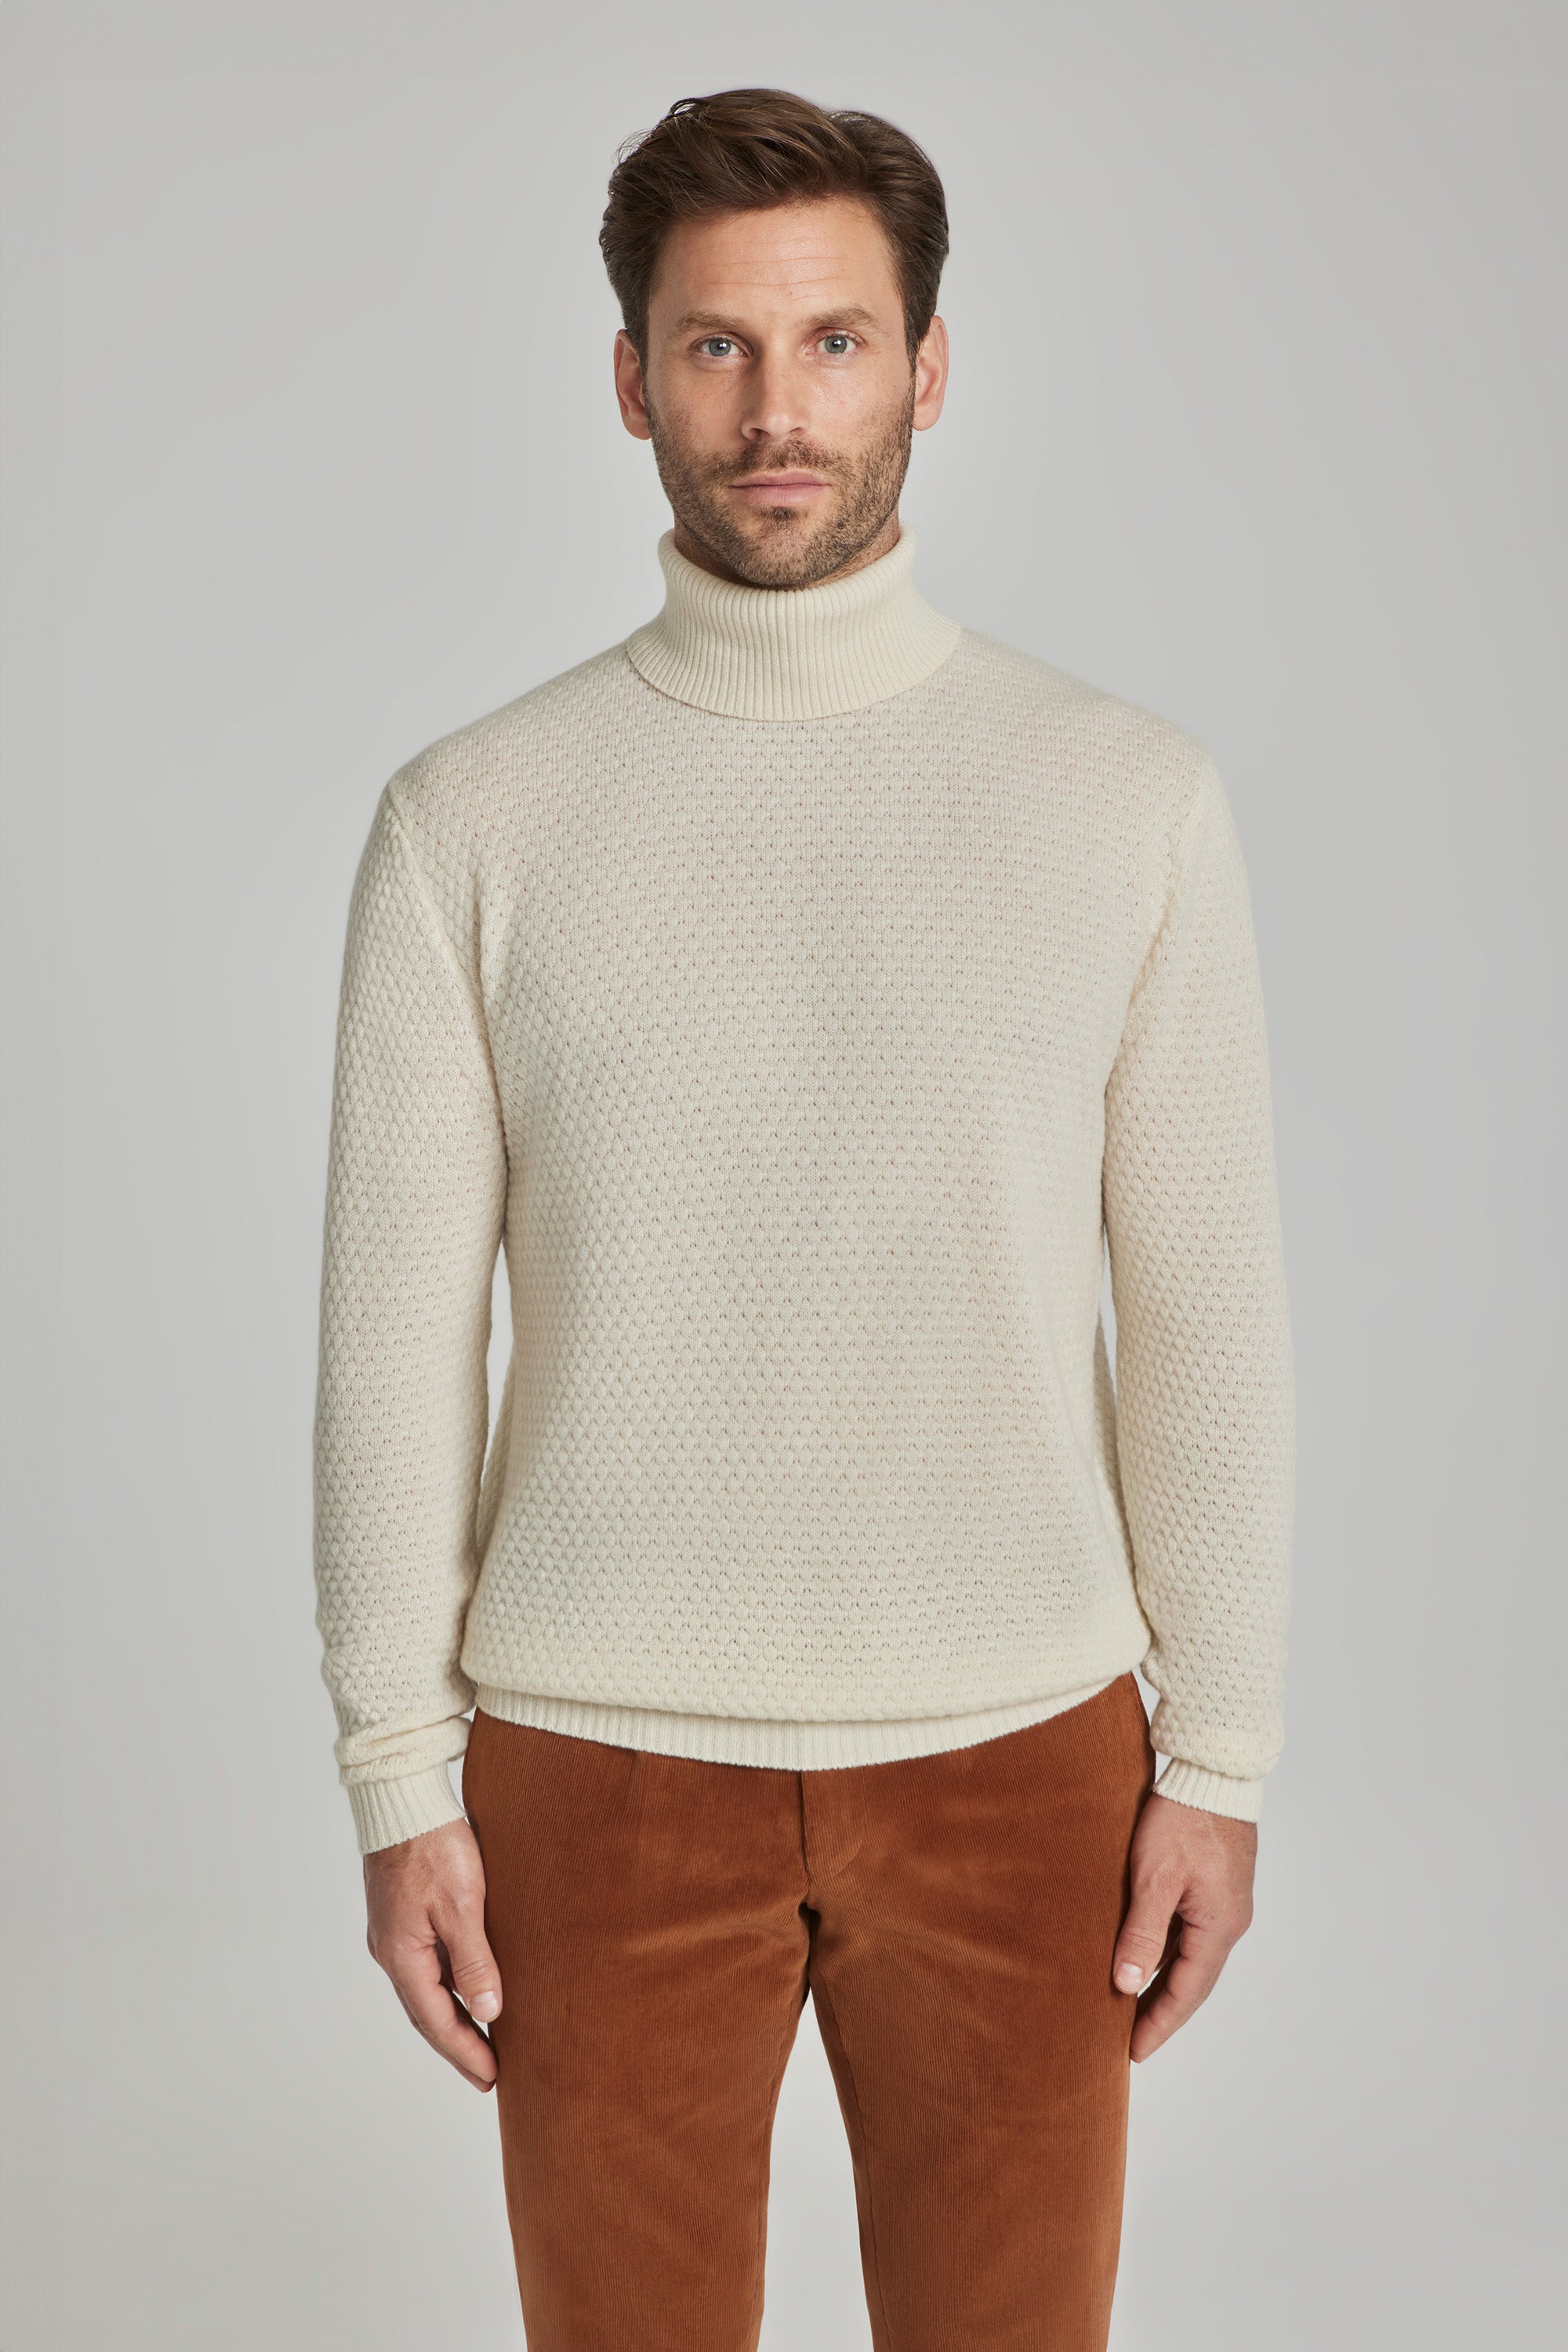 Renfrew Solid Cashmere and Wool Turtleneck Sweater in Ecru